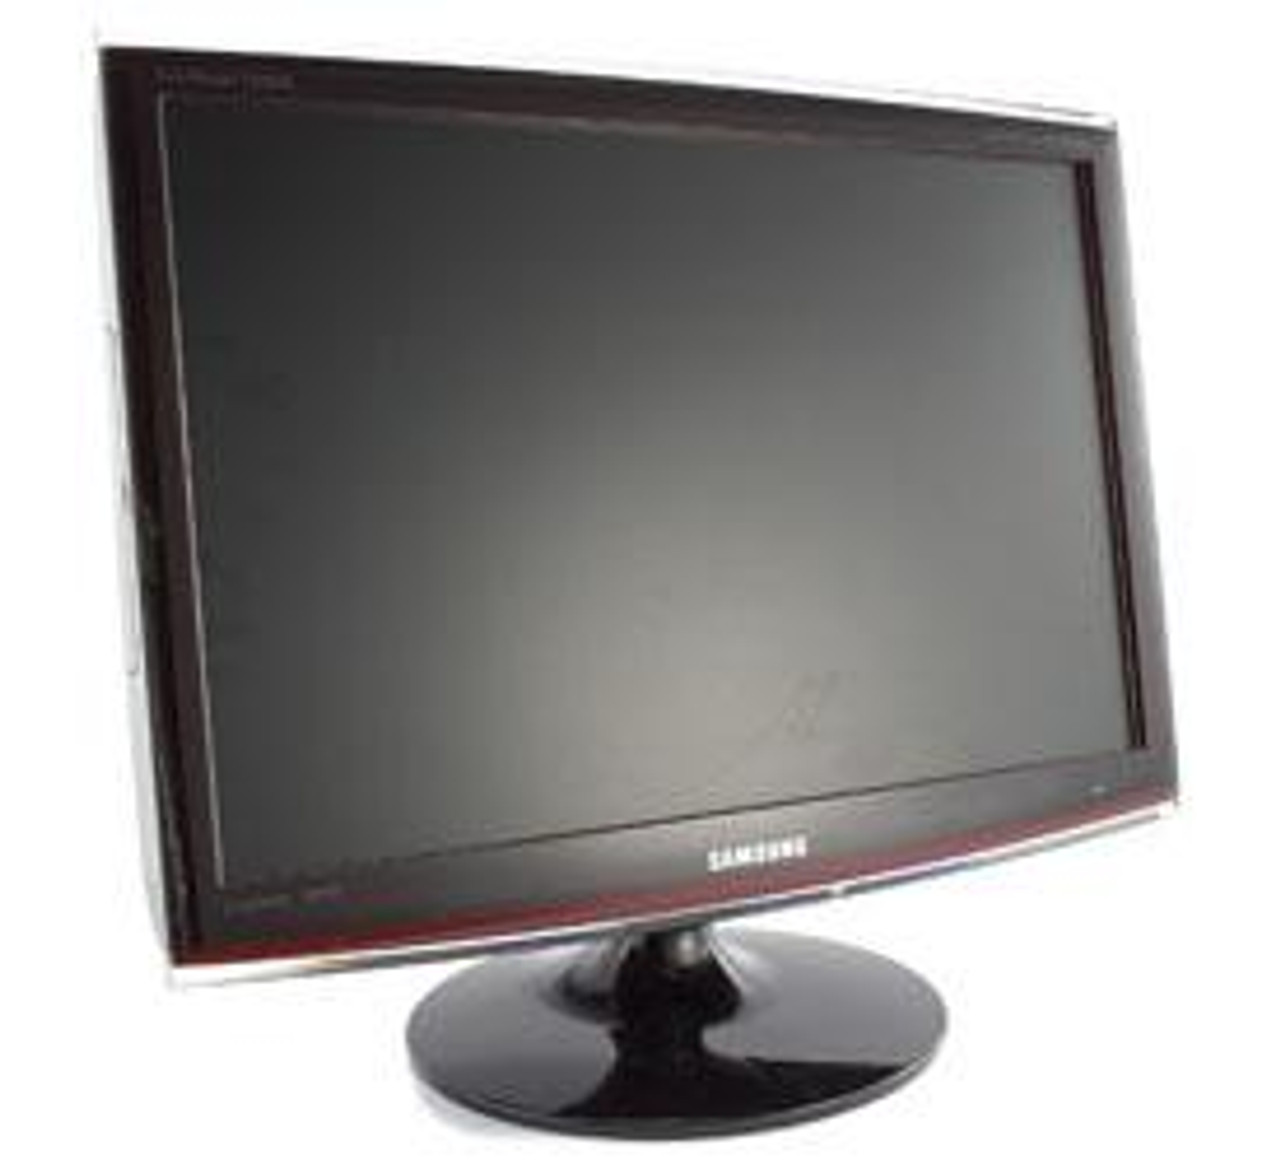 T220HD - Samsung SyncMaster 22-inch Widescreen TFT Active Matrix LCD Monitor (Refurbished)